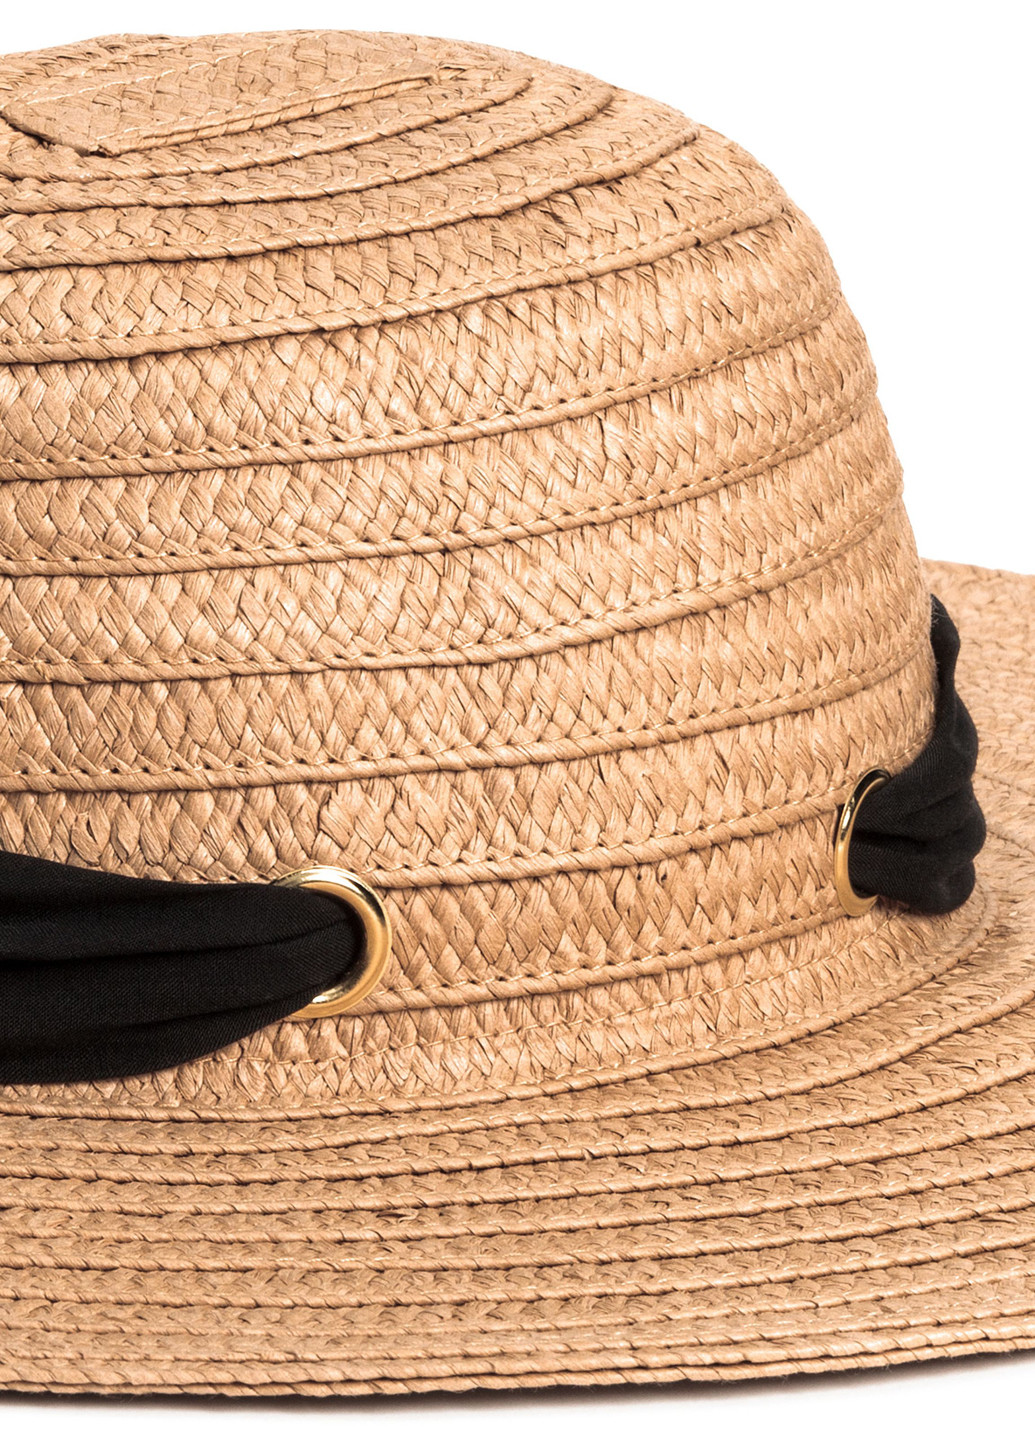 Шляпа H&M широкополая однотонная бежевая пляжная солома